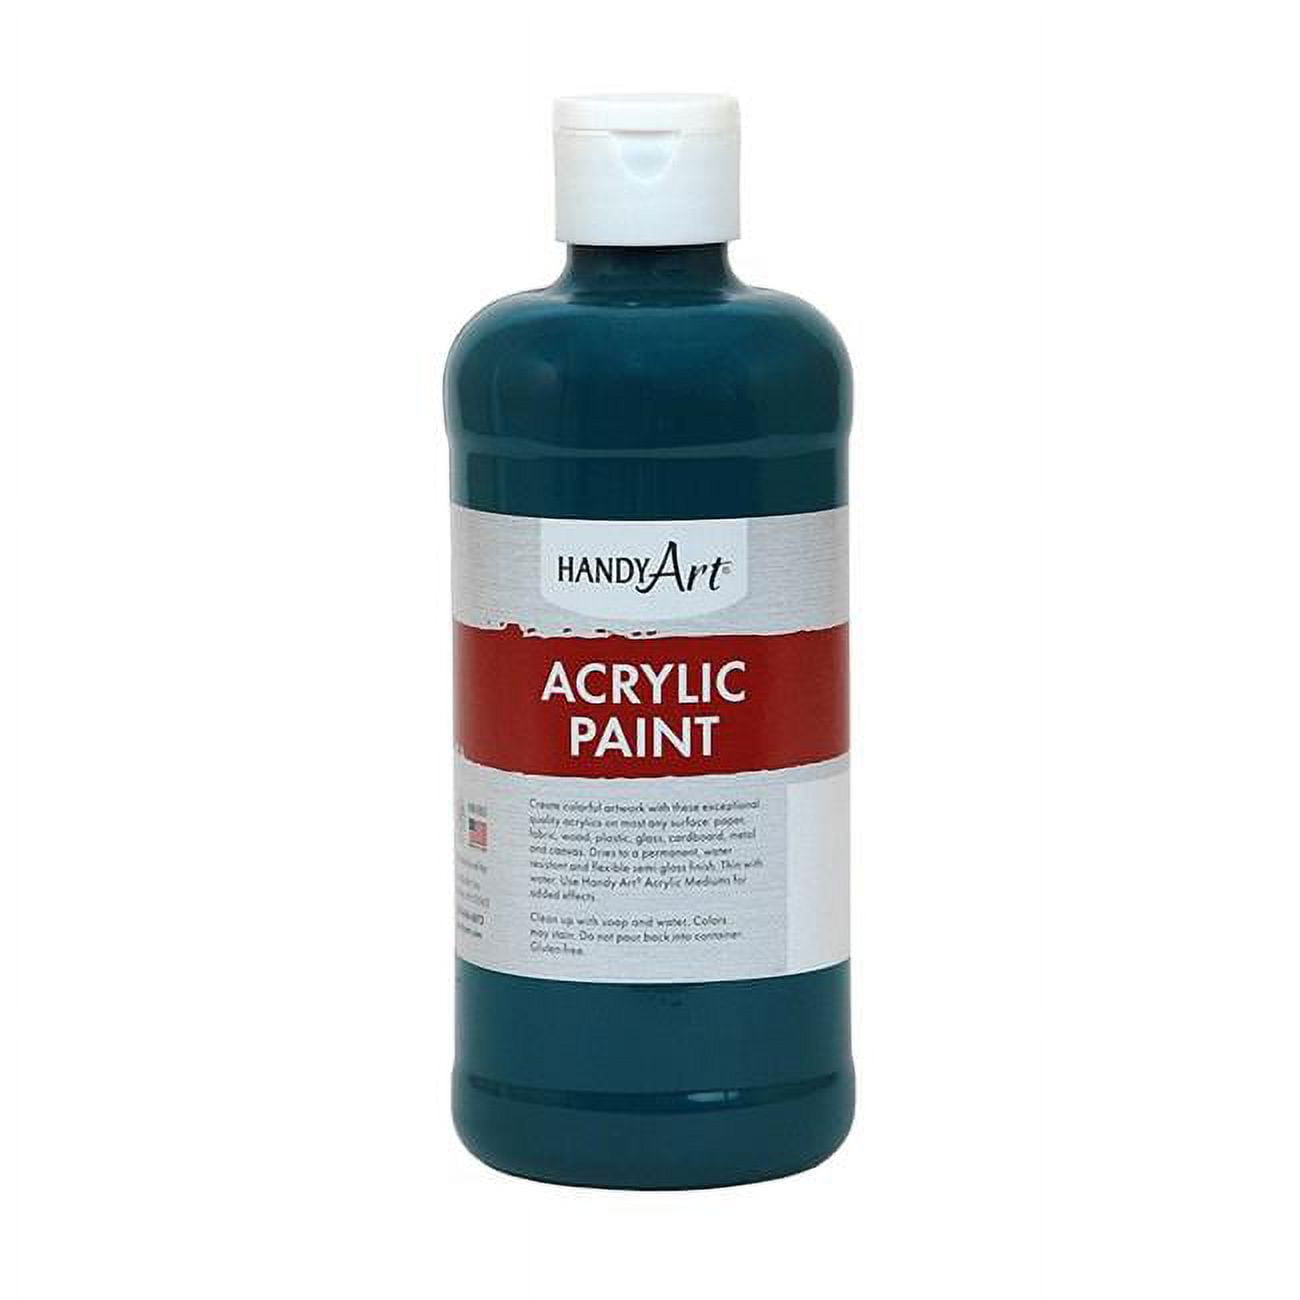 2Oz Primary Colors Acrylic Paint Bottles - Basic Supplies - 8 Pieces